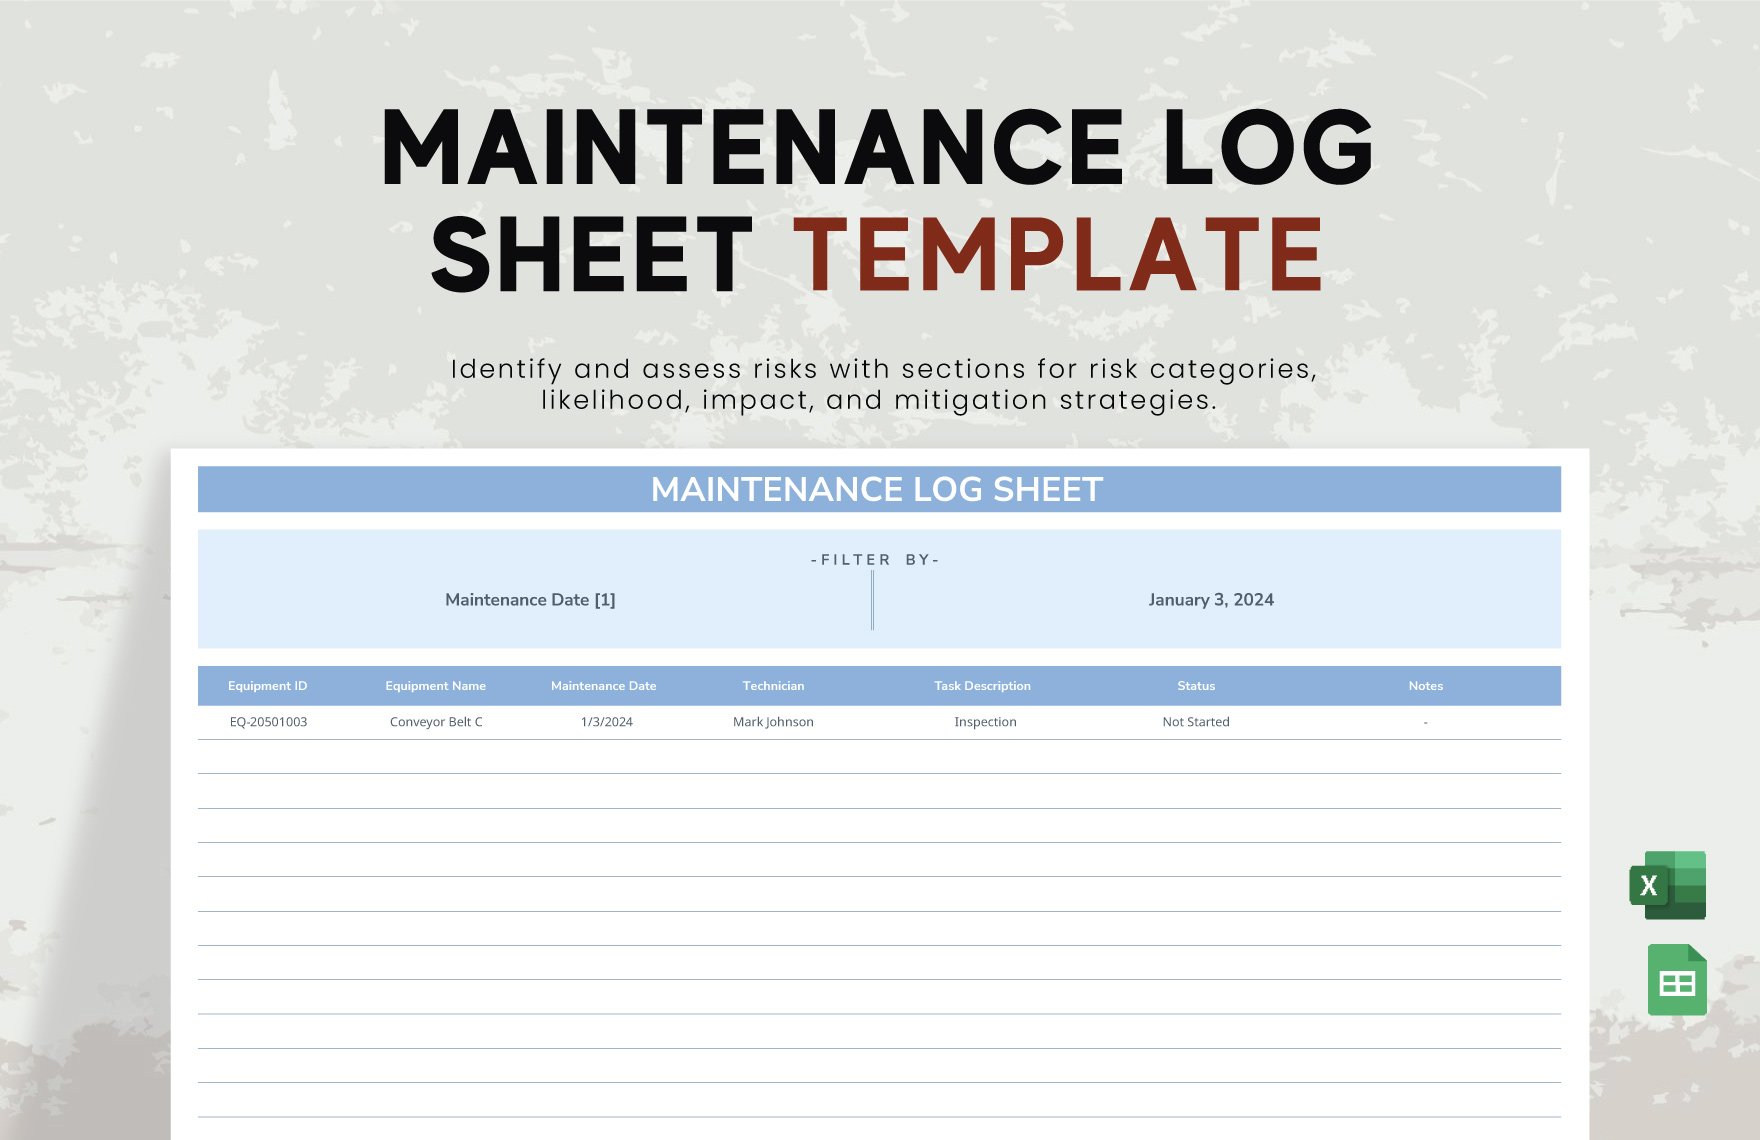 Maintenance Log Sheet Template in Excel, Google Sheets